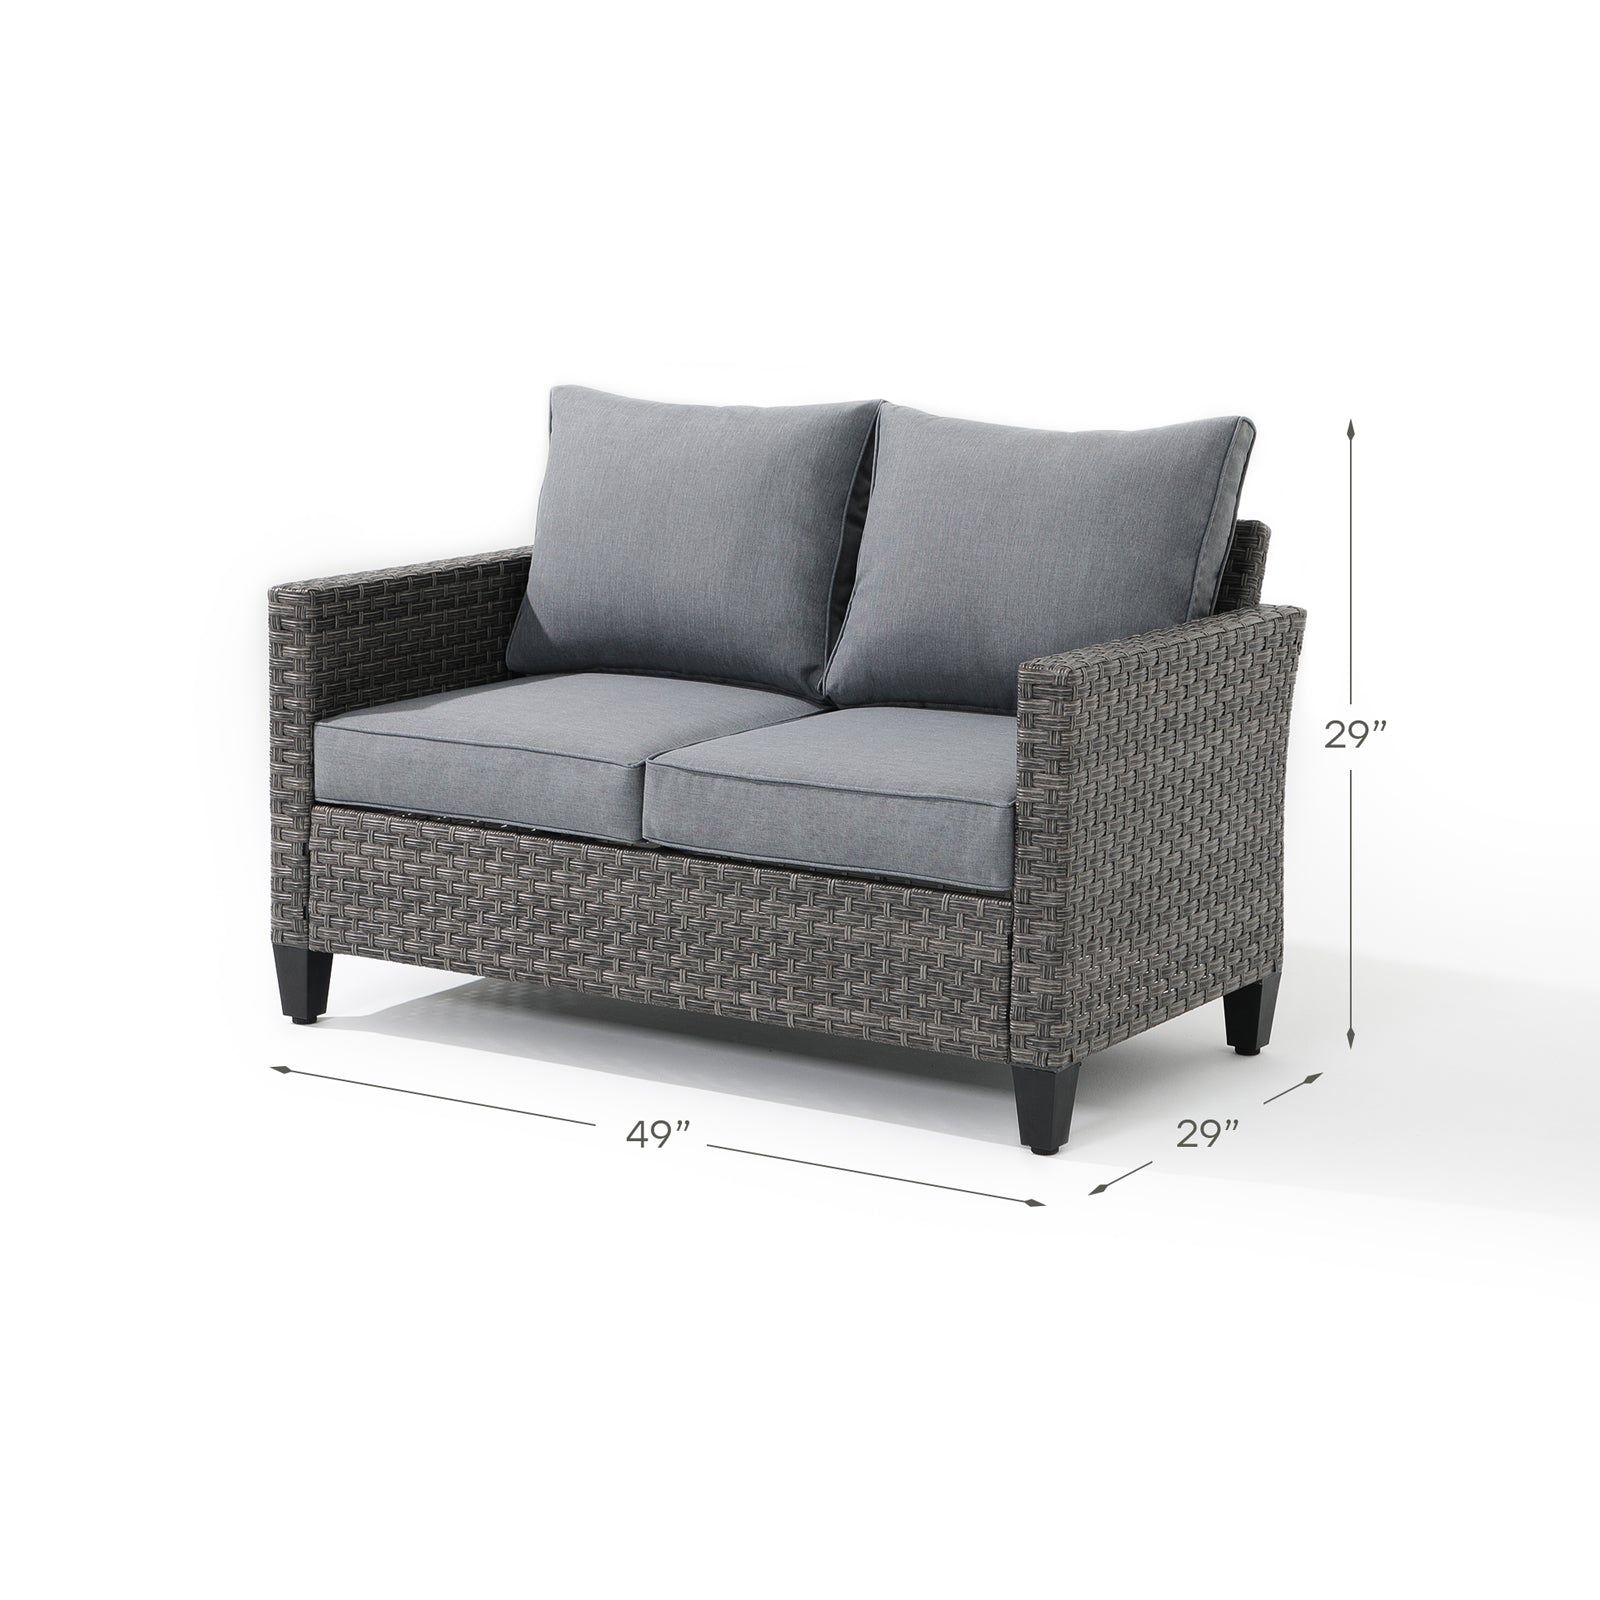 Ayia grey loveseat with rattan design, grey cushions, dimension information - Jardina Furniture#color_Grey